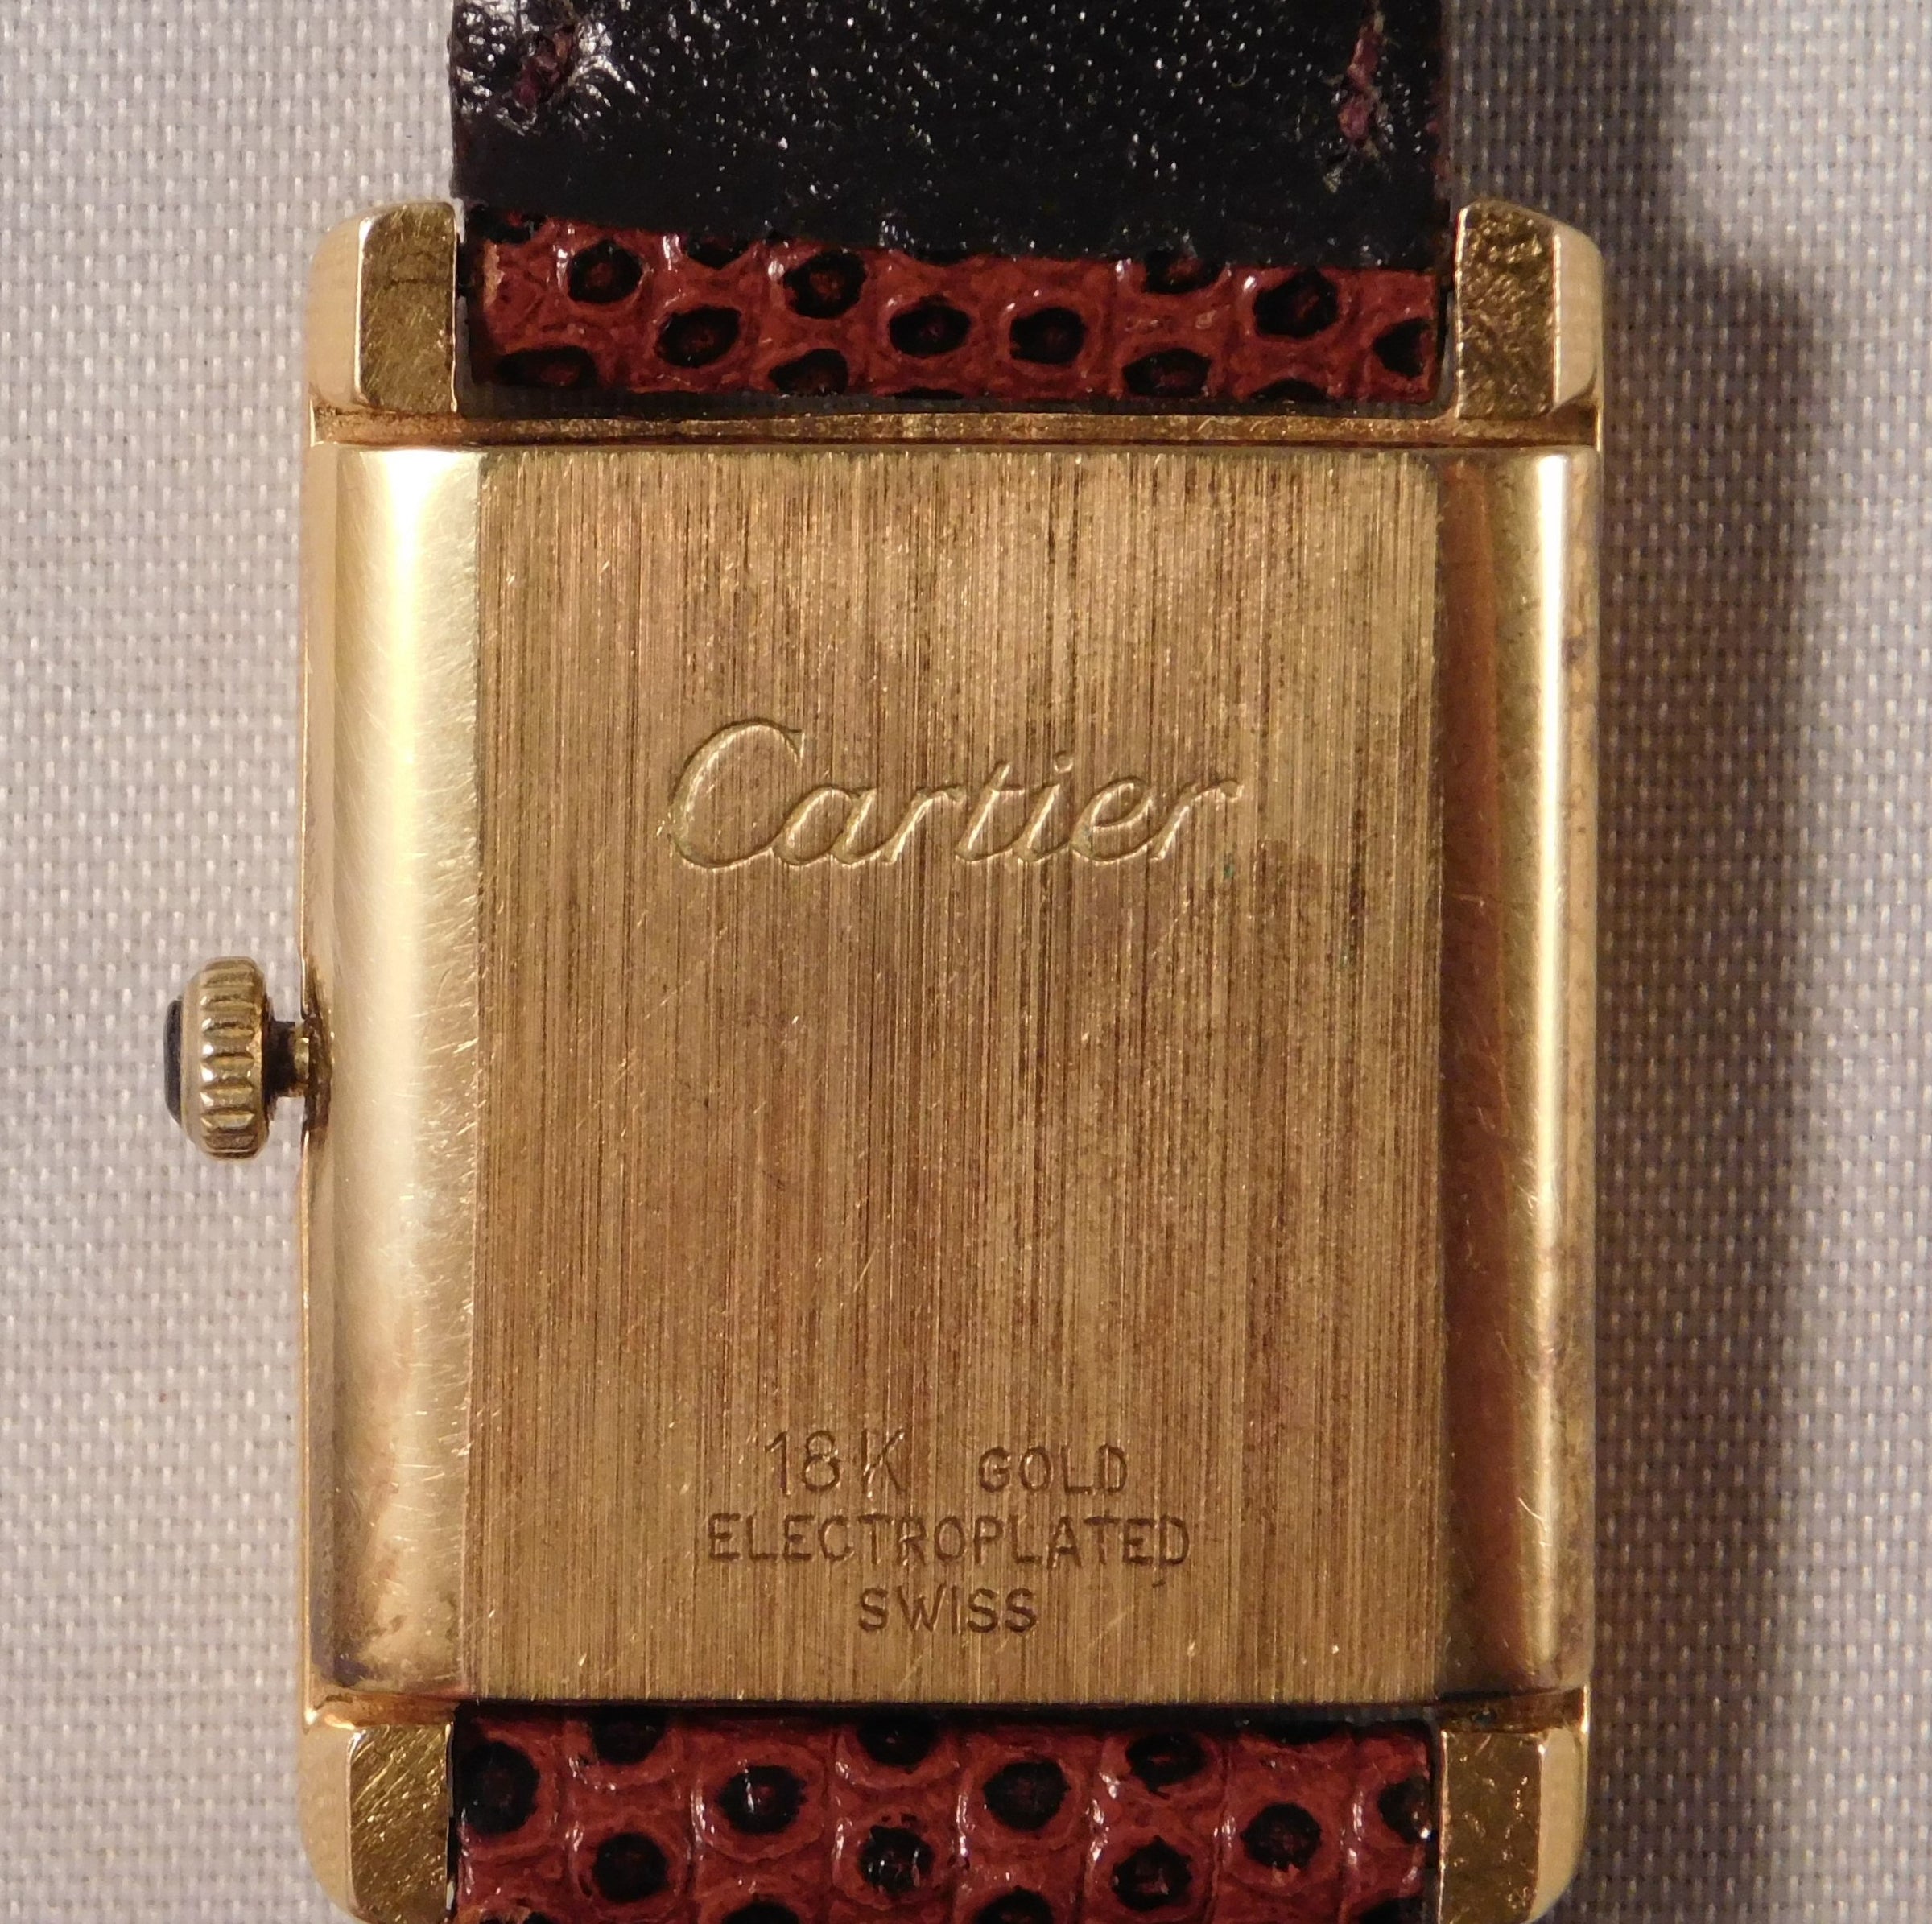 Cartier Tank Louis — Wind Vintage